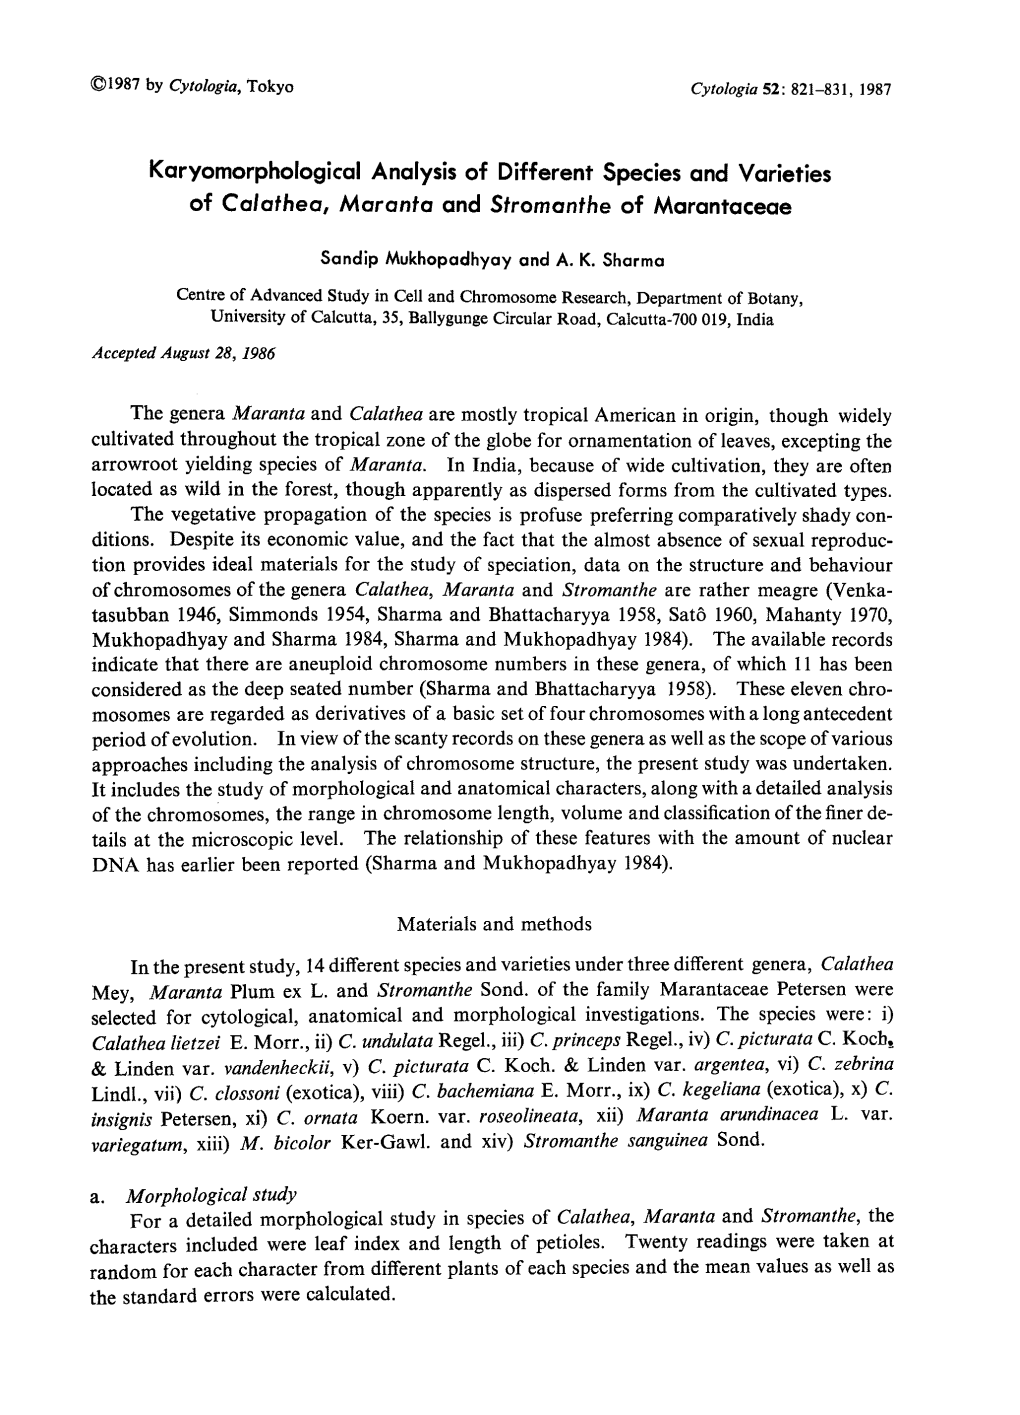 Karyomorphological Analysis of Different Species and Varieties of Calathea, Maranta and Stromanthe of Marantaceae